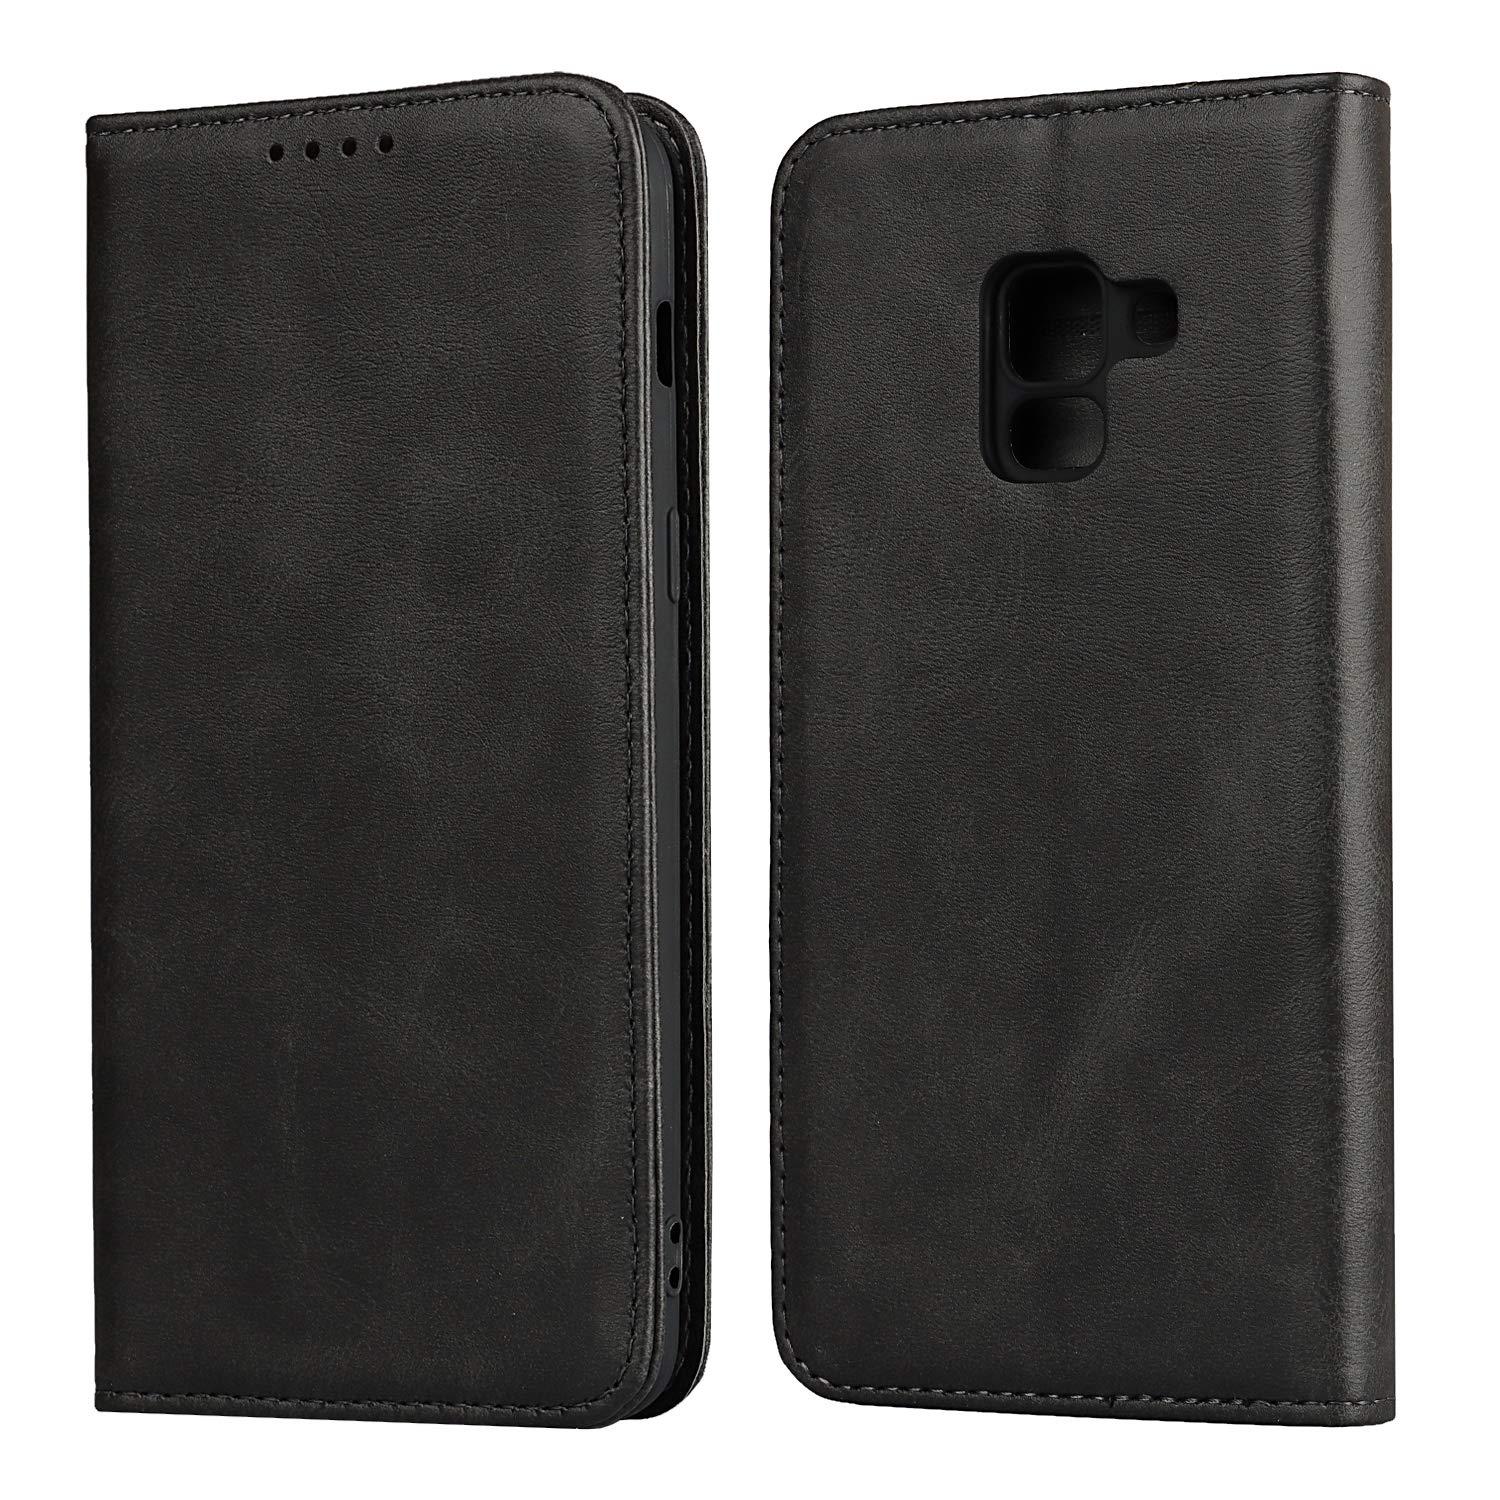 SailorTech Samsung Galaxy A8 2018 Wallet Case, Premium PU Leather Folio Flip Cases Cover with Kickstand Card Slots Holder Black